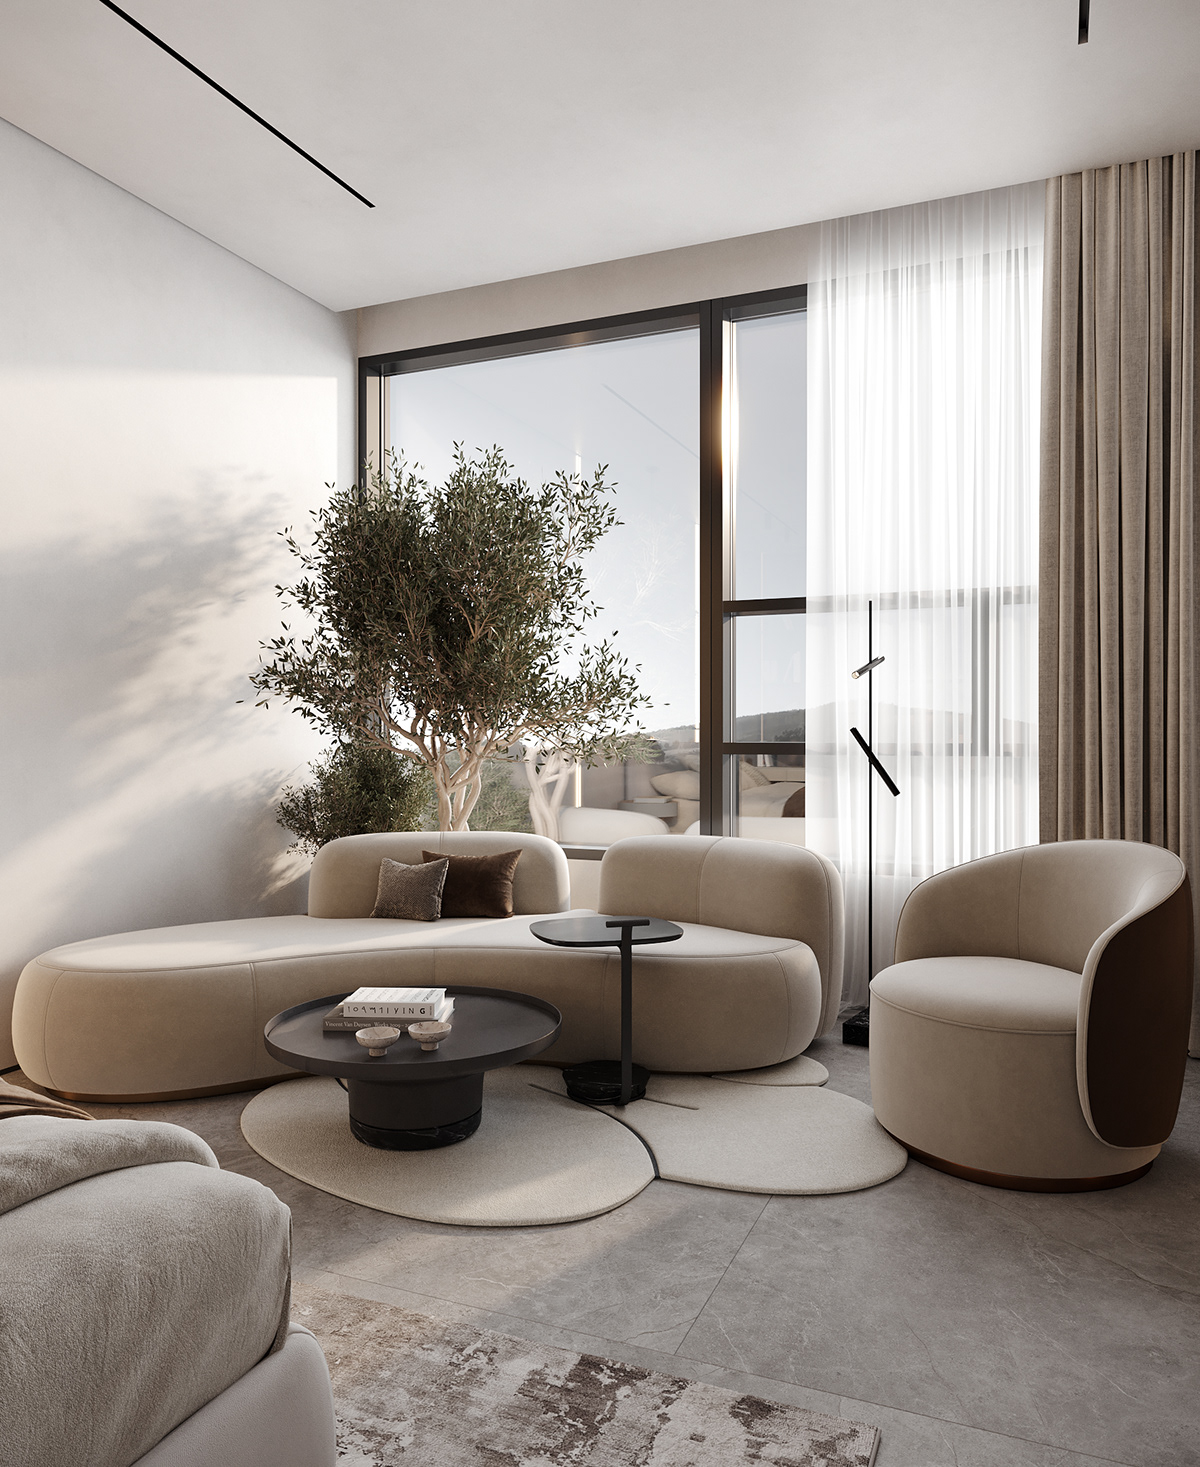 3ds max bedroom Botswana design Interior kiev Minimalism modern Render Vizualization